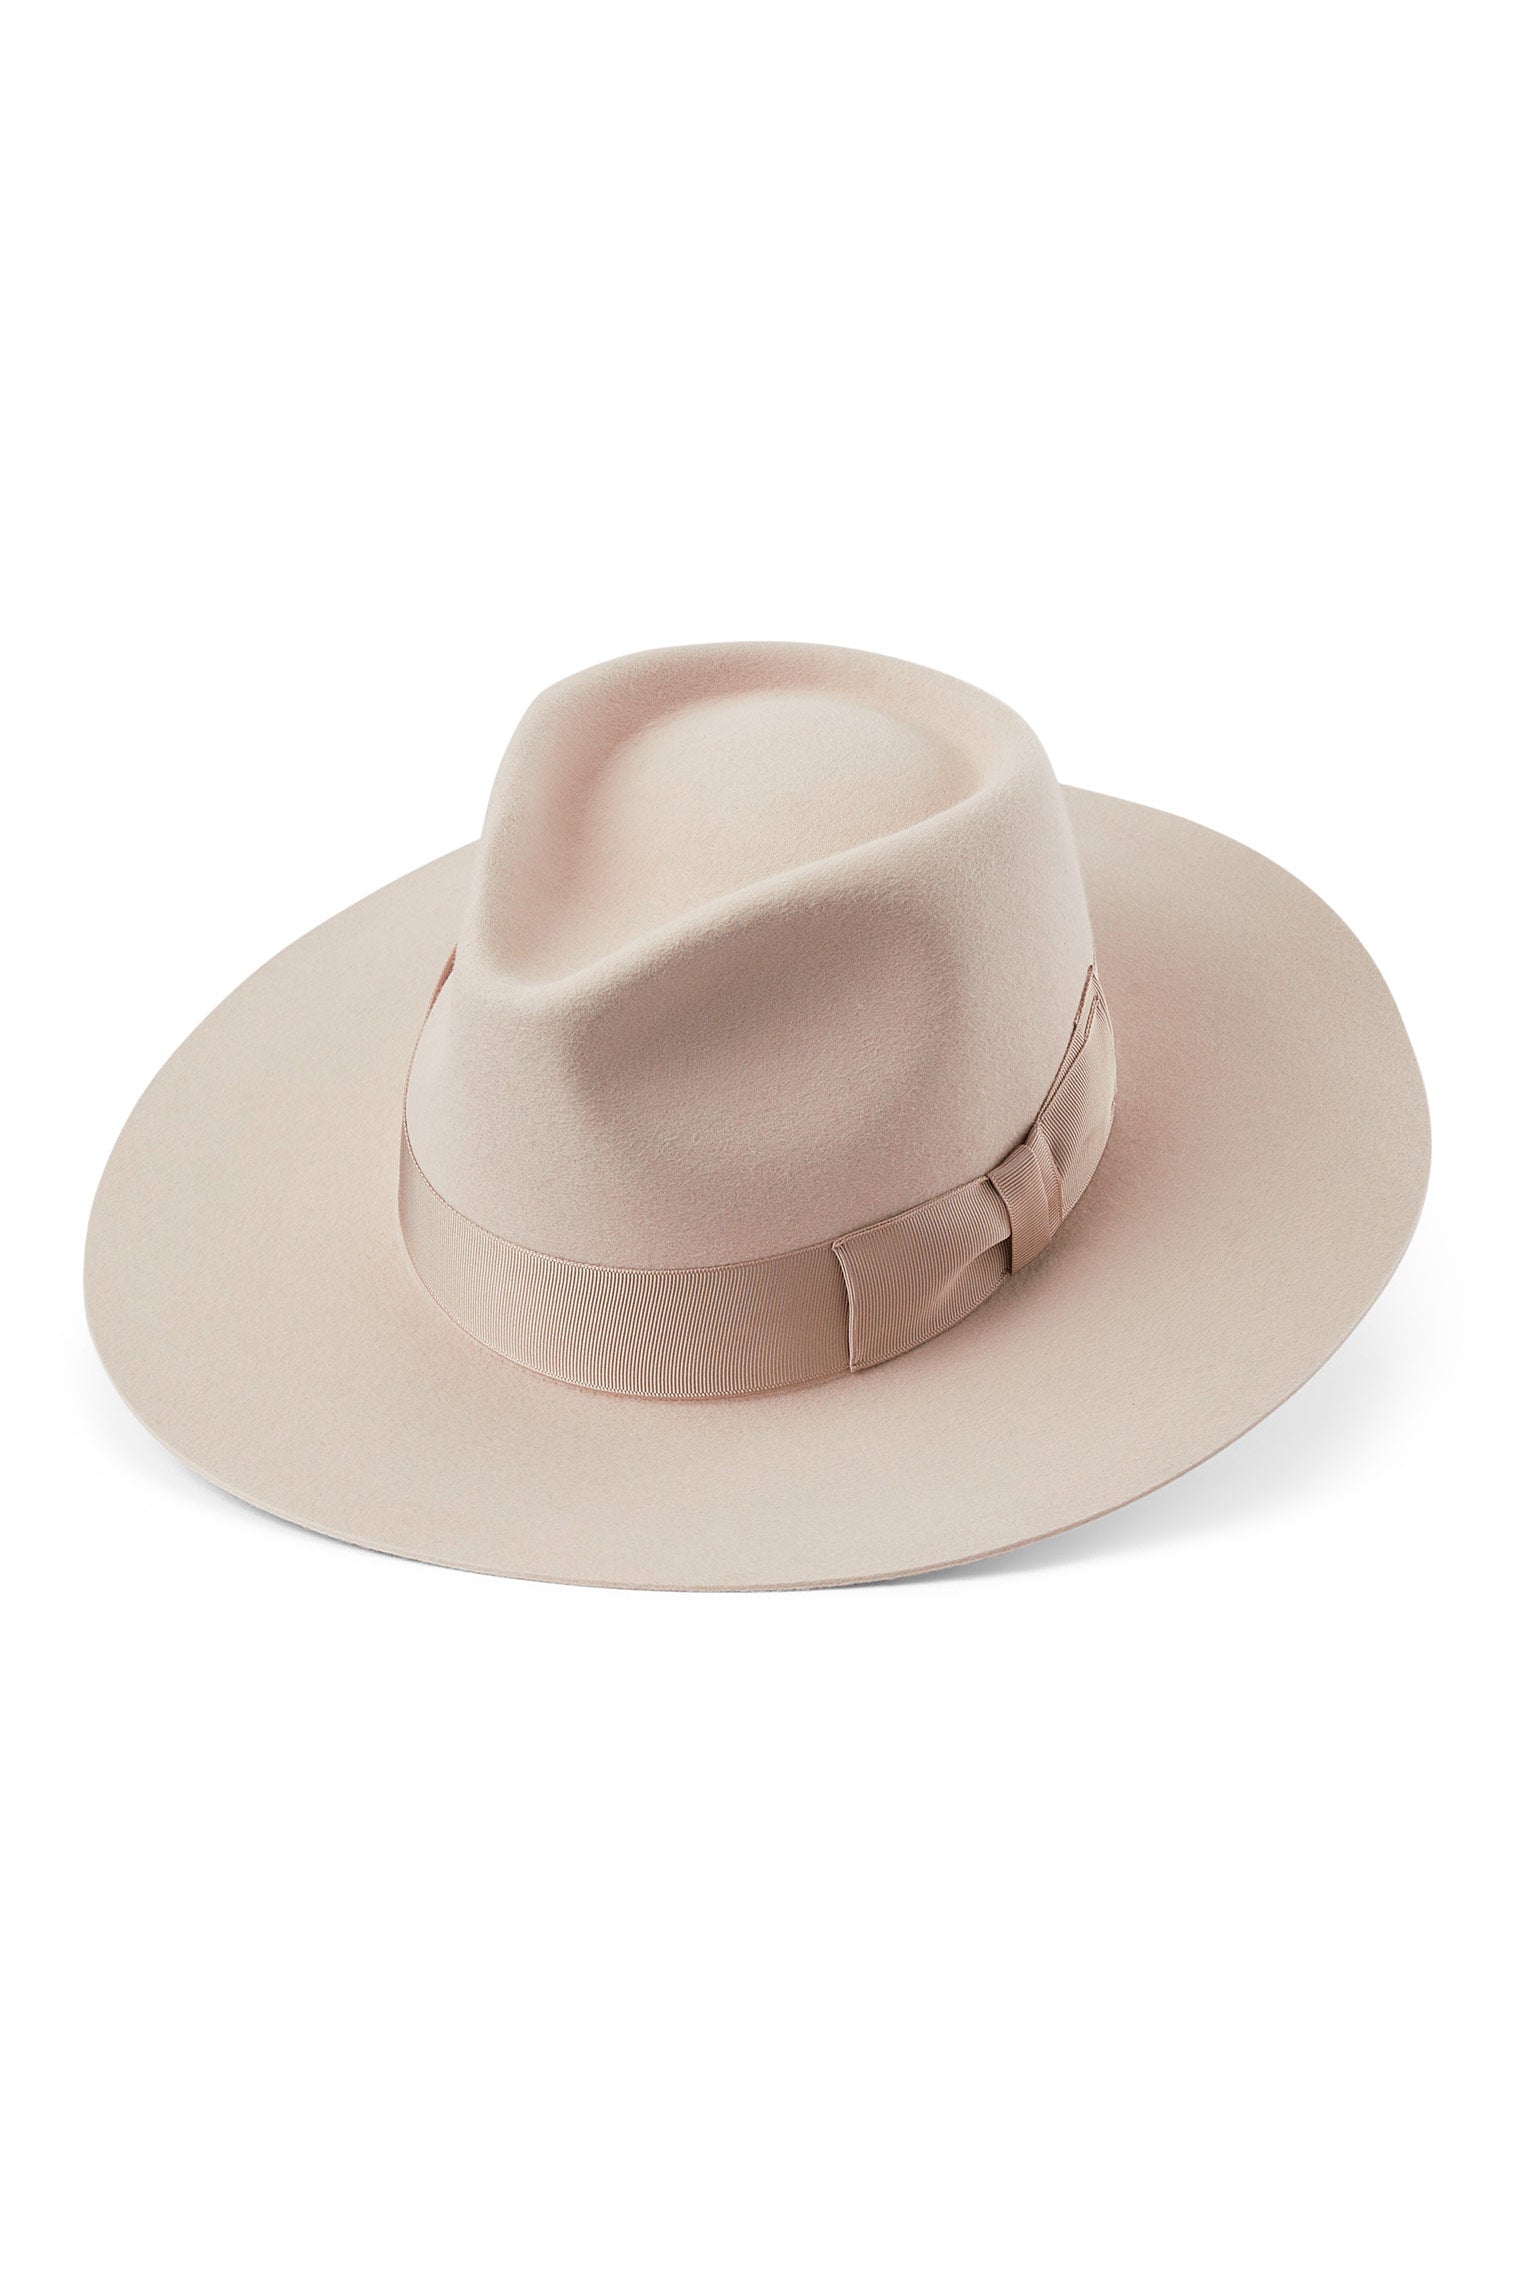 Toni Cream Flat-Brim Fedora - Hats for Tall People - Lock & Co. Hatters London UK